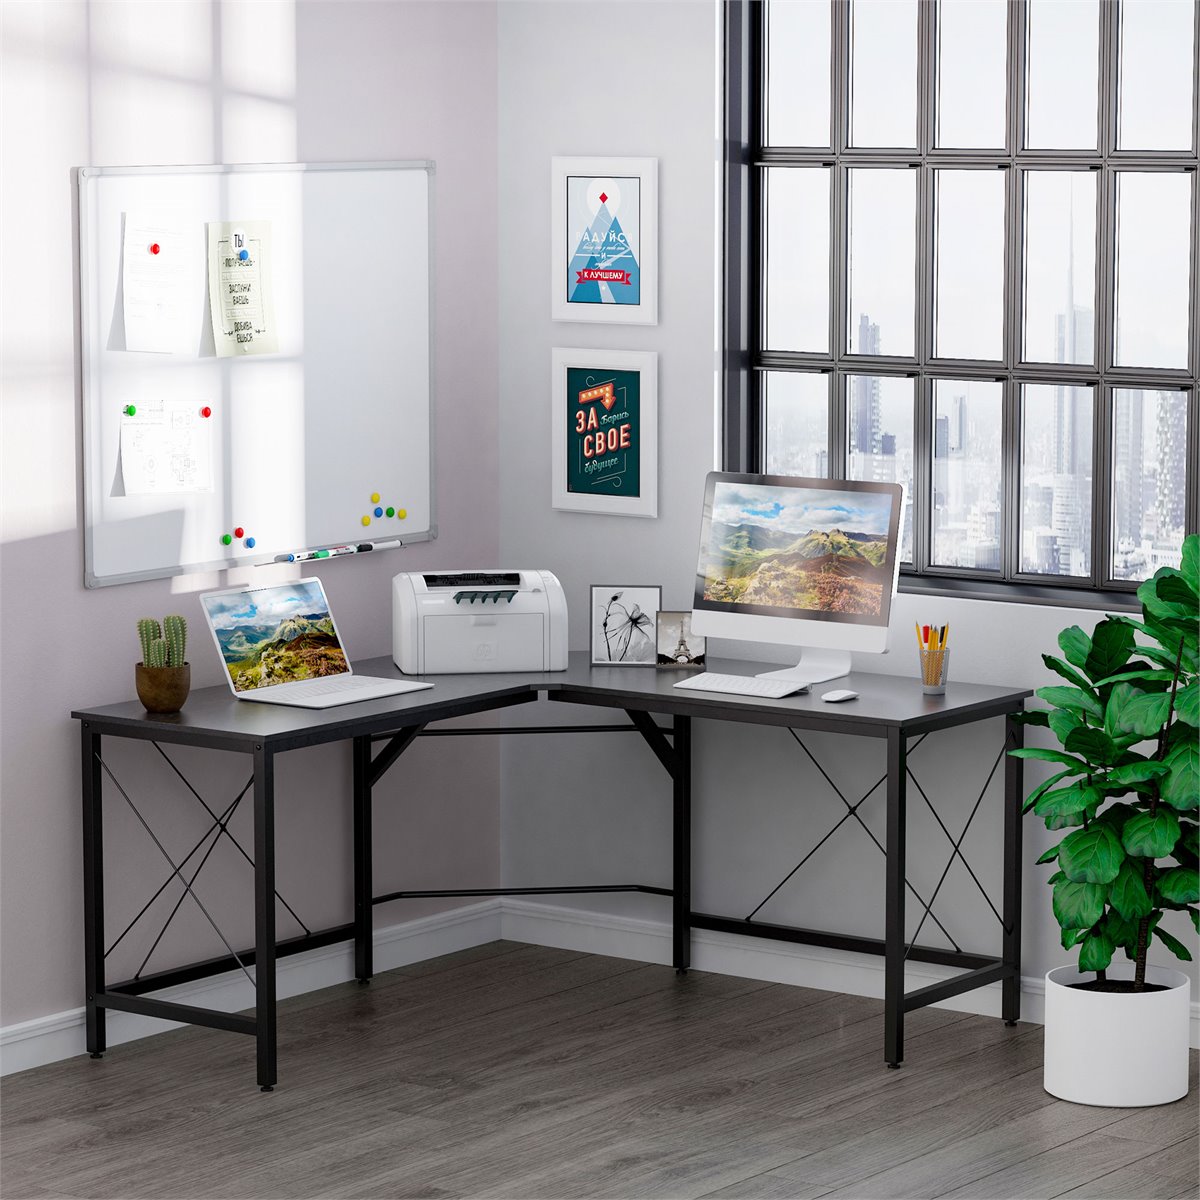 Muebles para computadora e impresora desk para escritorio barato y moderno  negro